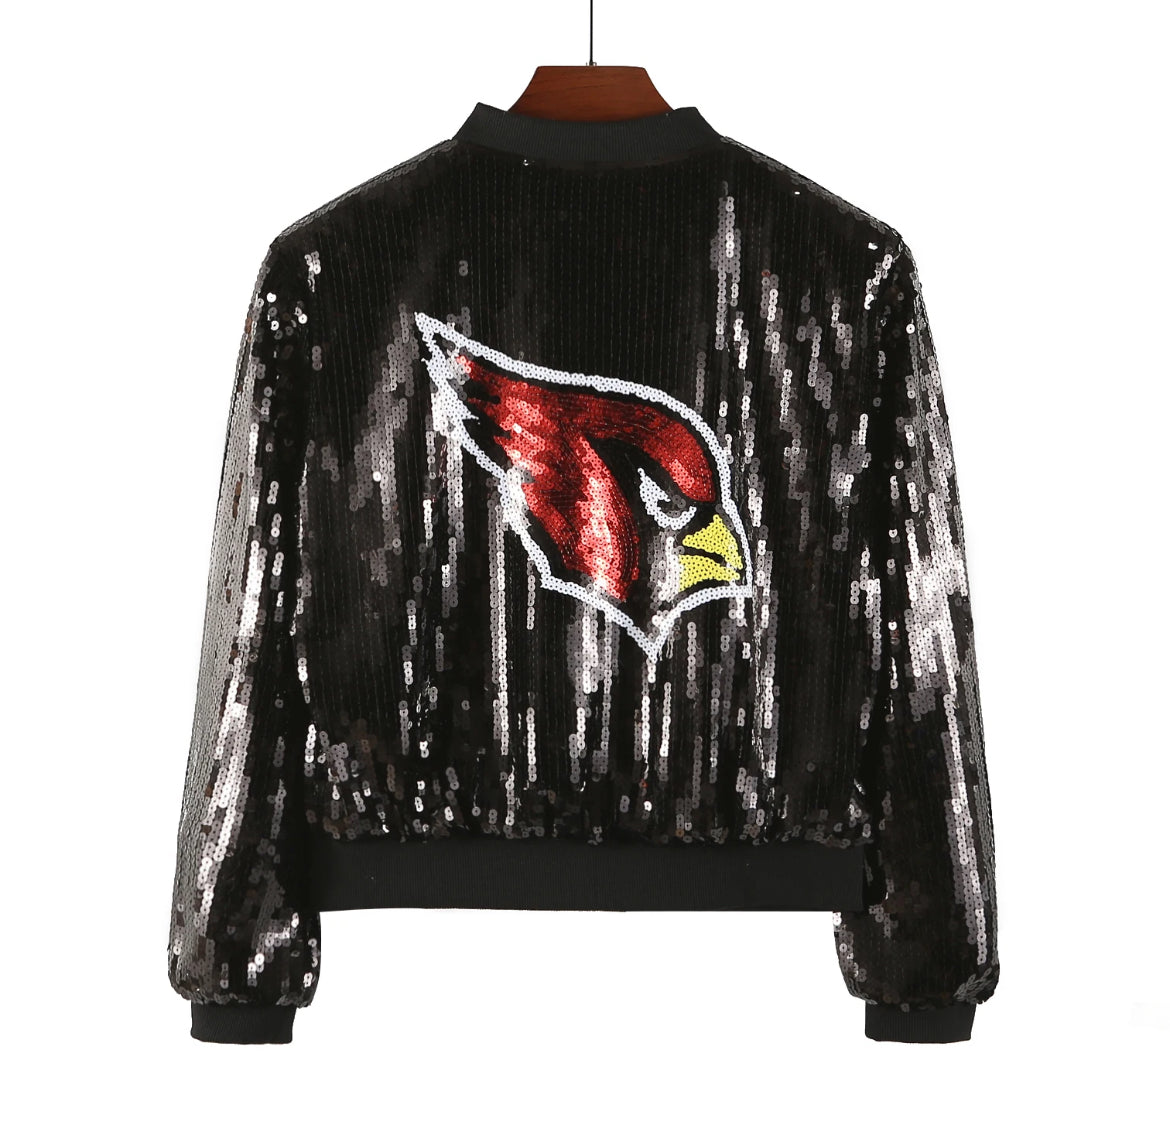 Arizona Cardinals sequin jacket